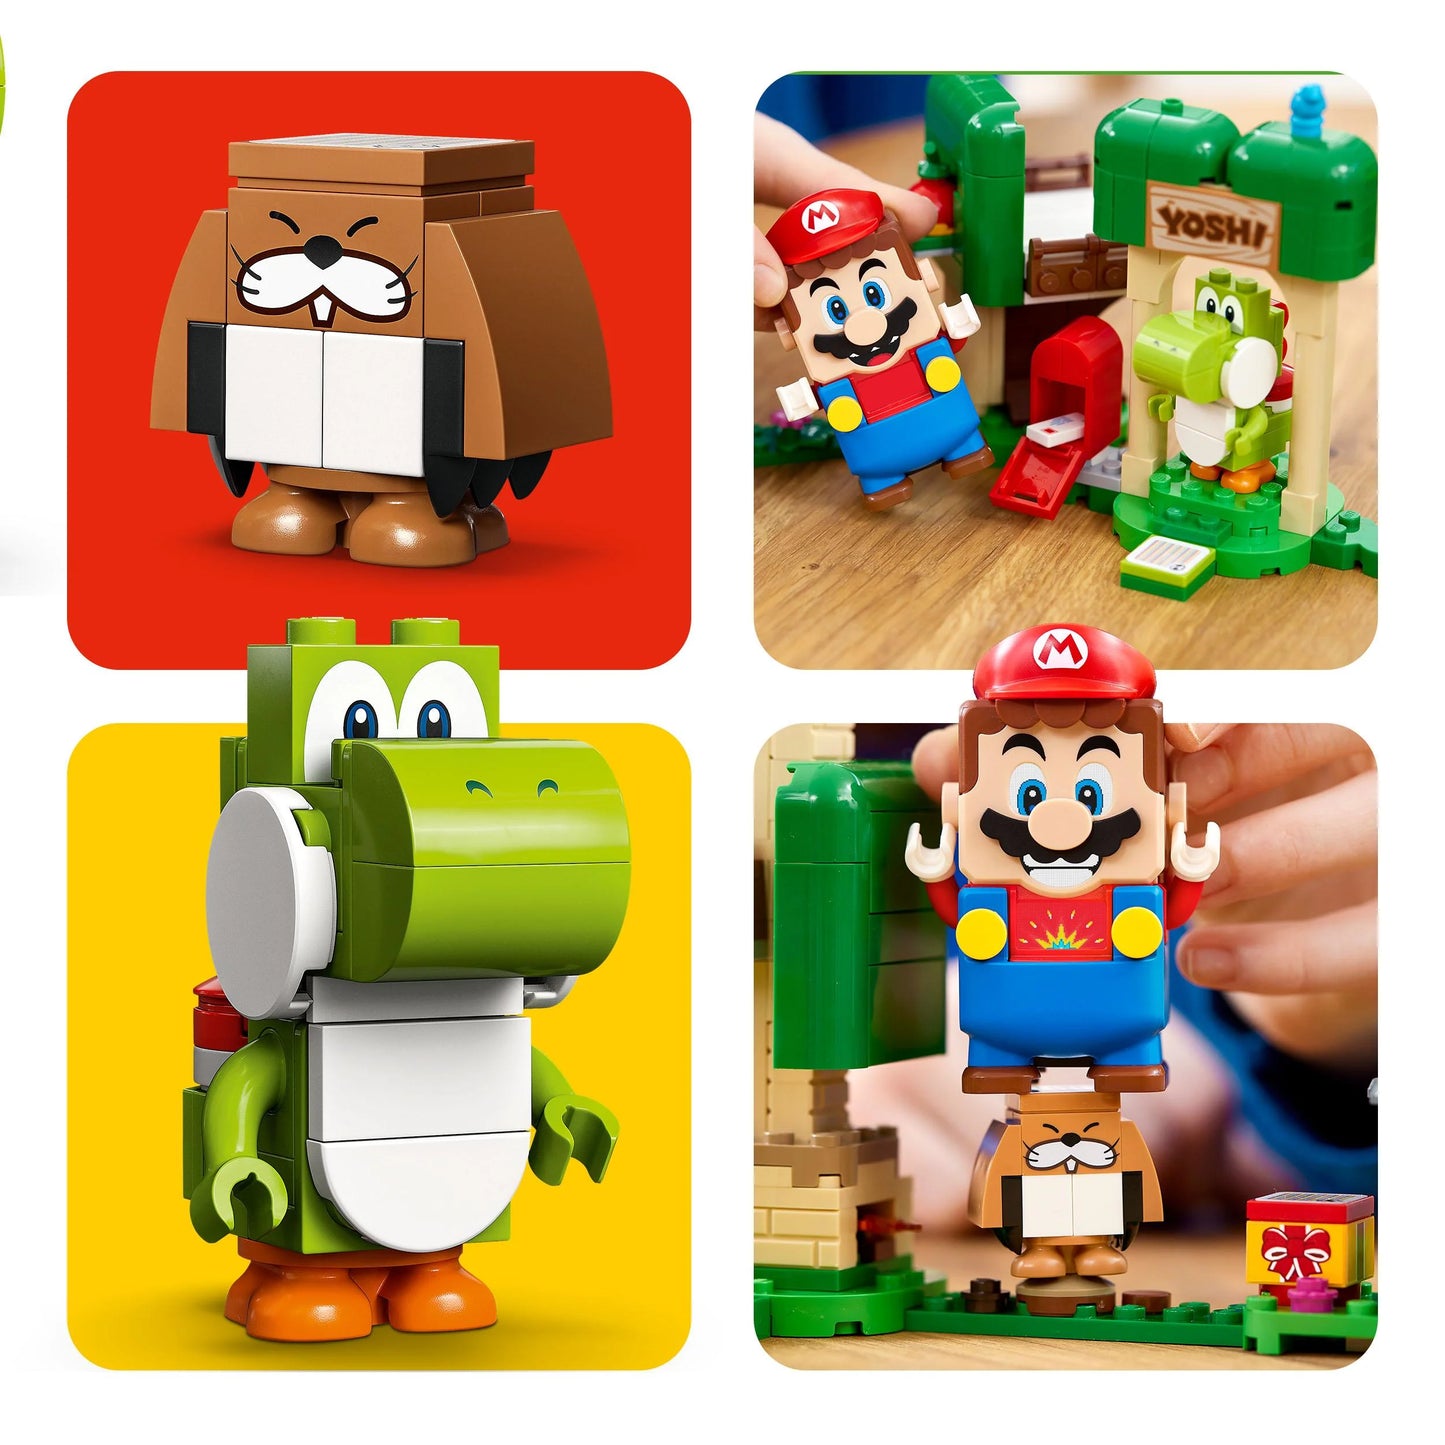 Expansion Set: Yoshi's Gift House - LEGO Super Mario